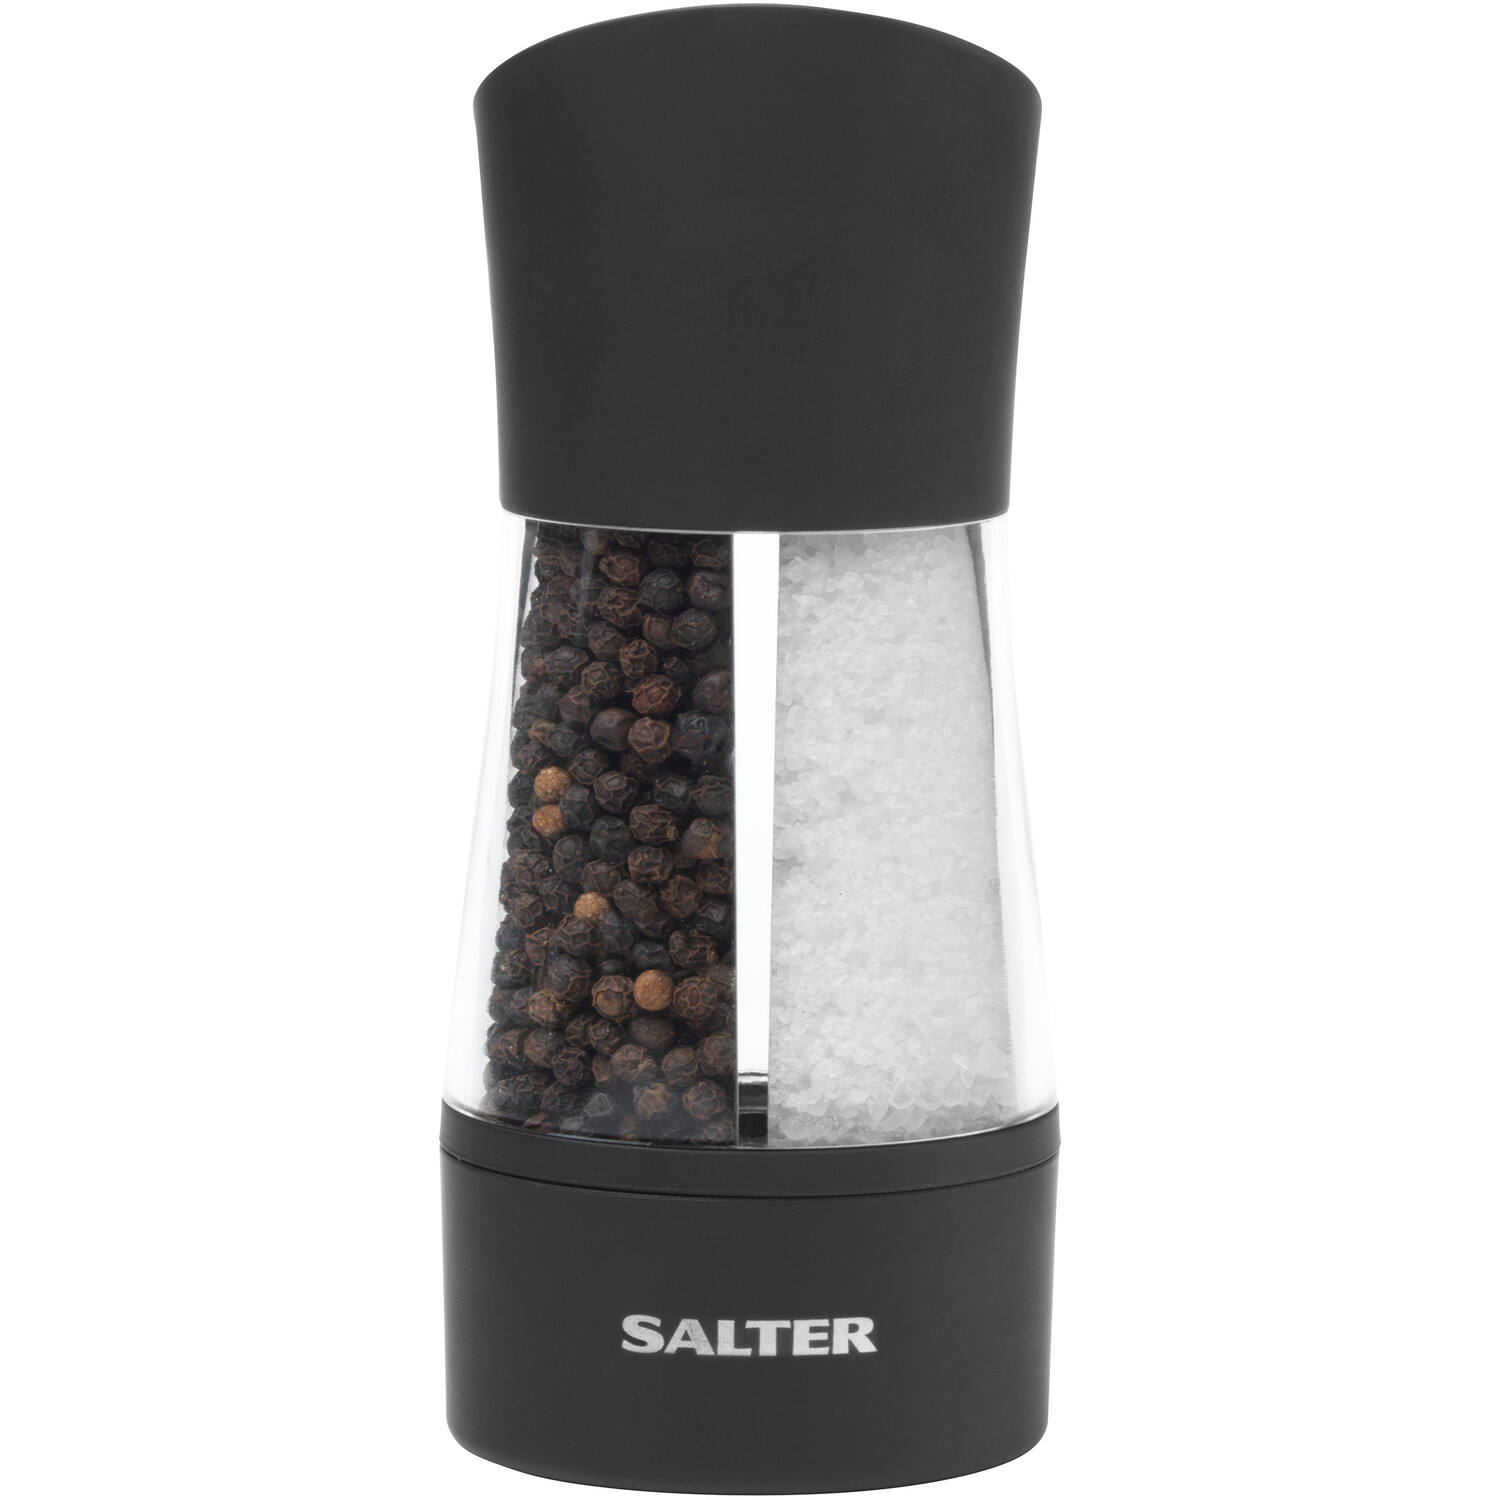 Dual Salt and Pepper Mechanical Mill - Black Image 1